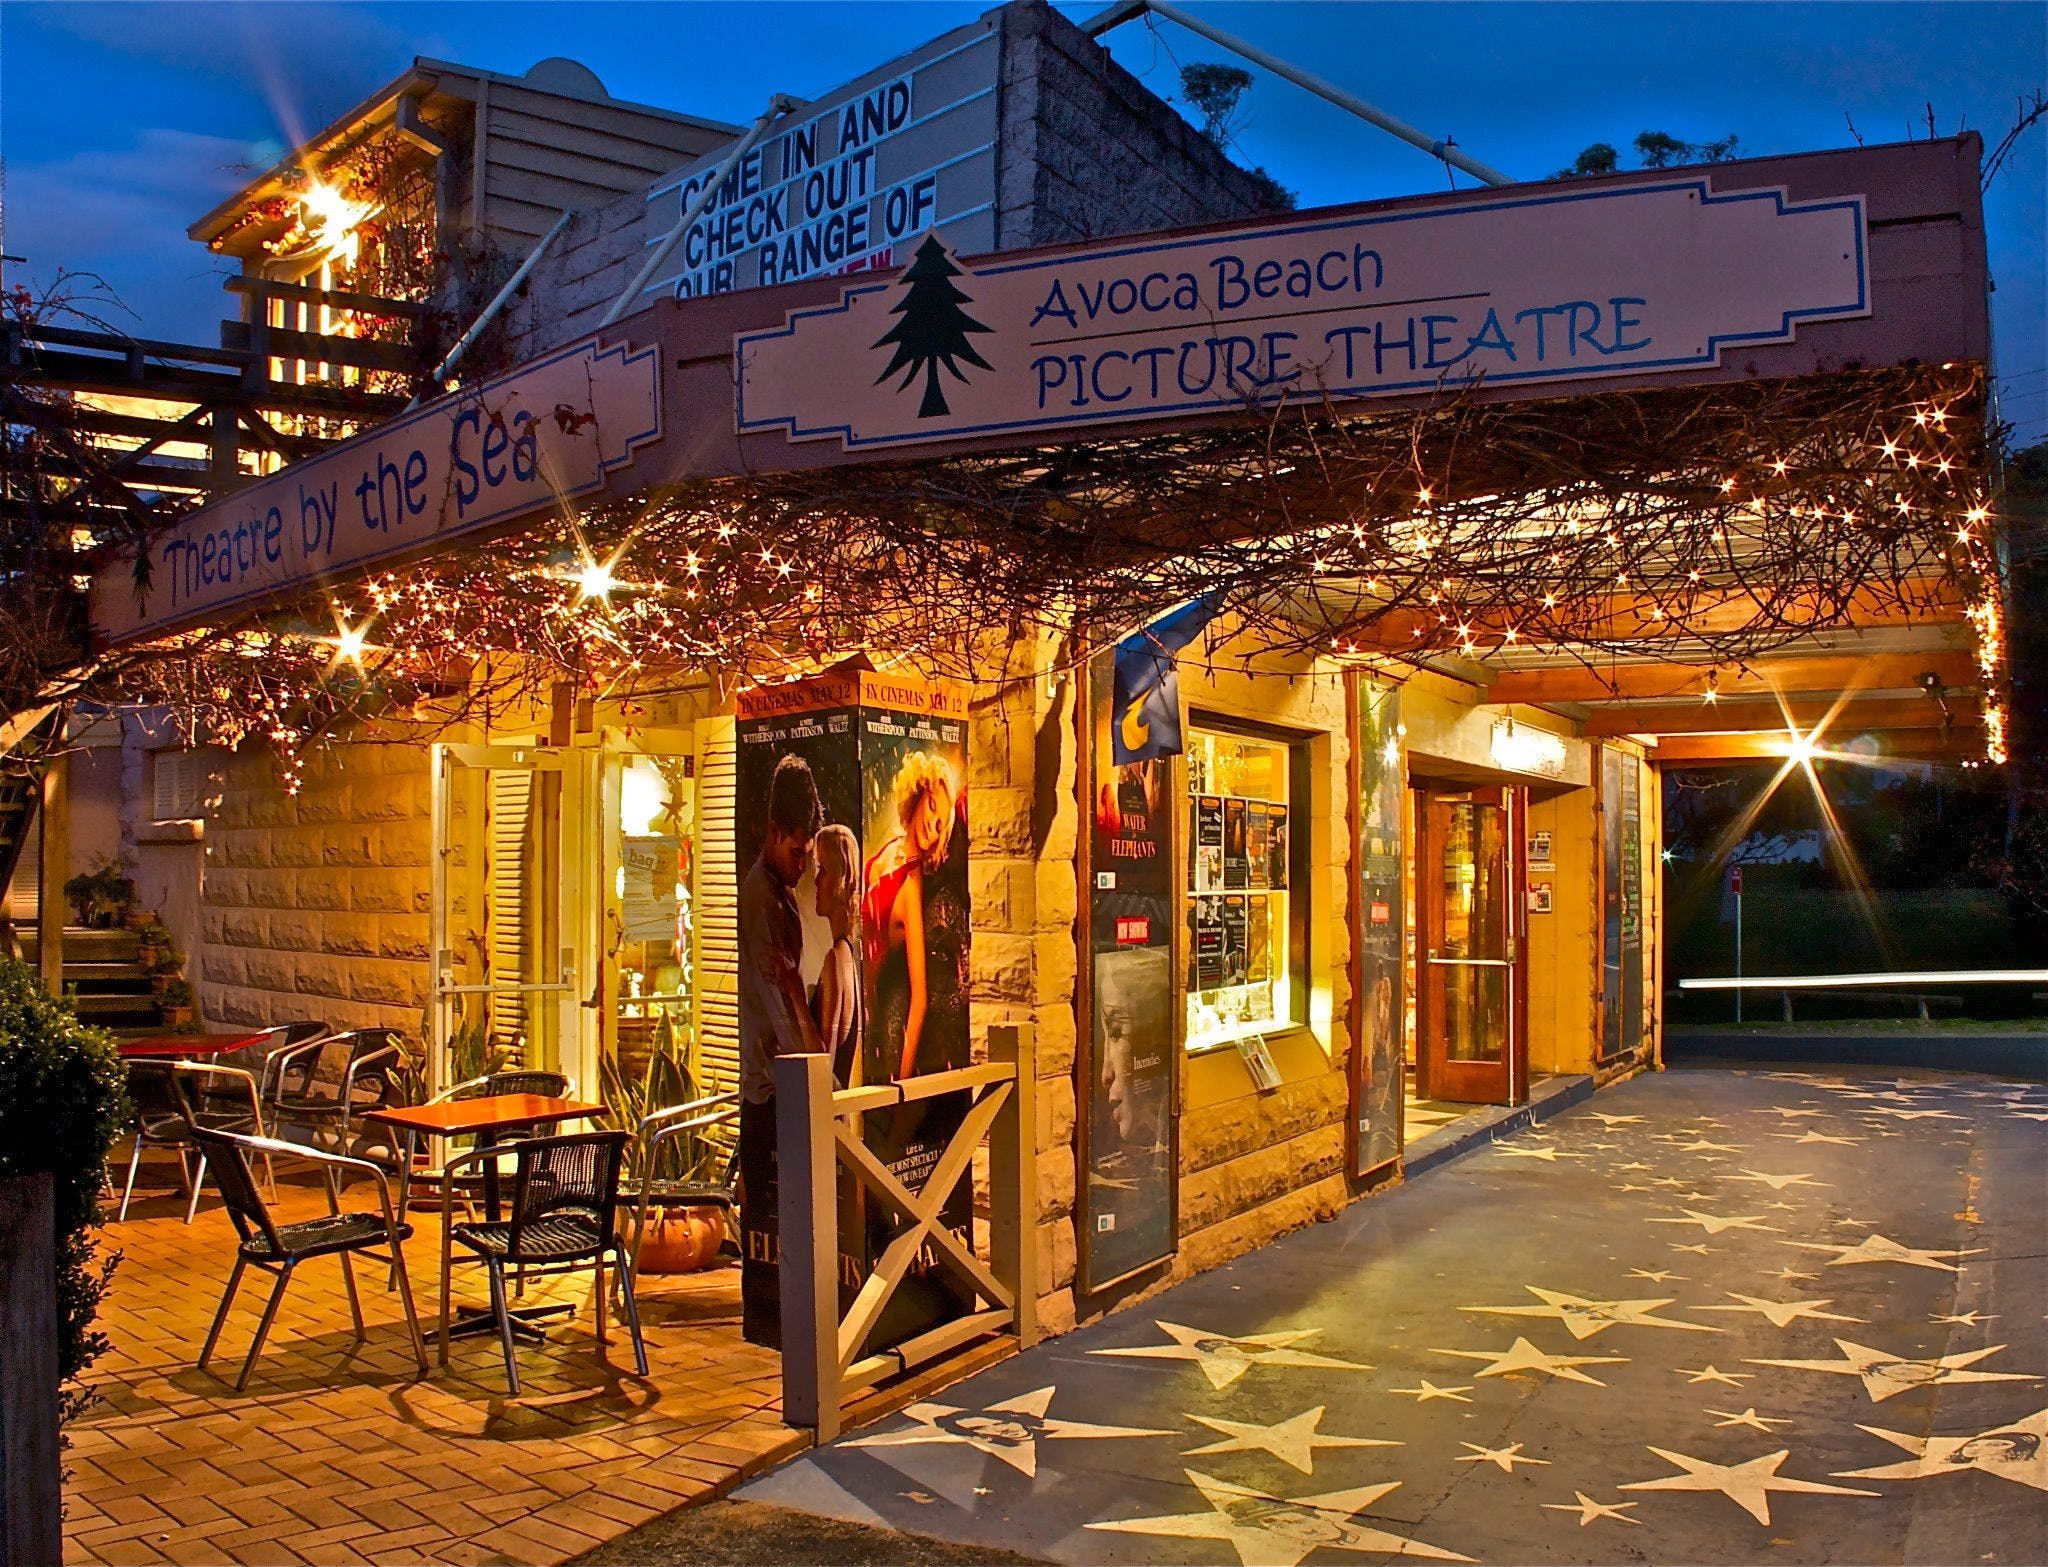 Avoca Beach Picture Theatre - Accommodation Kalgoorlie